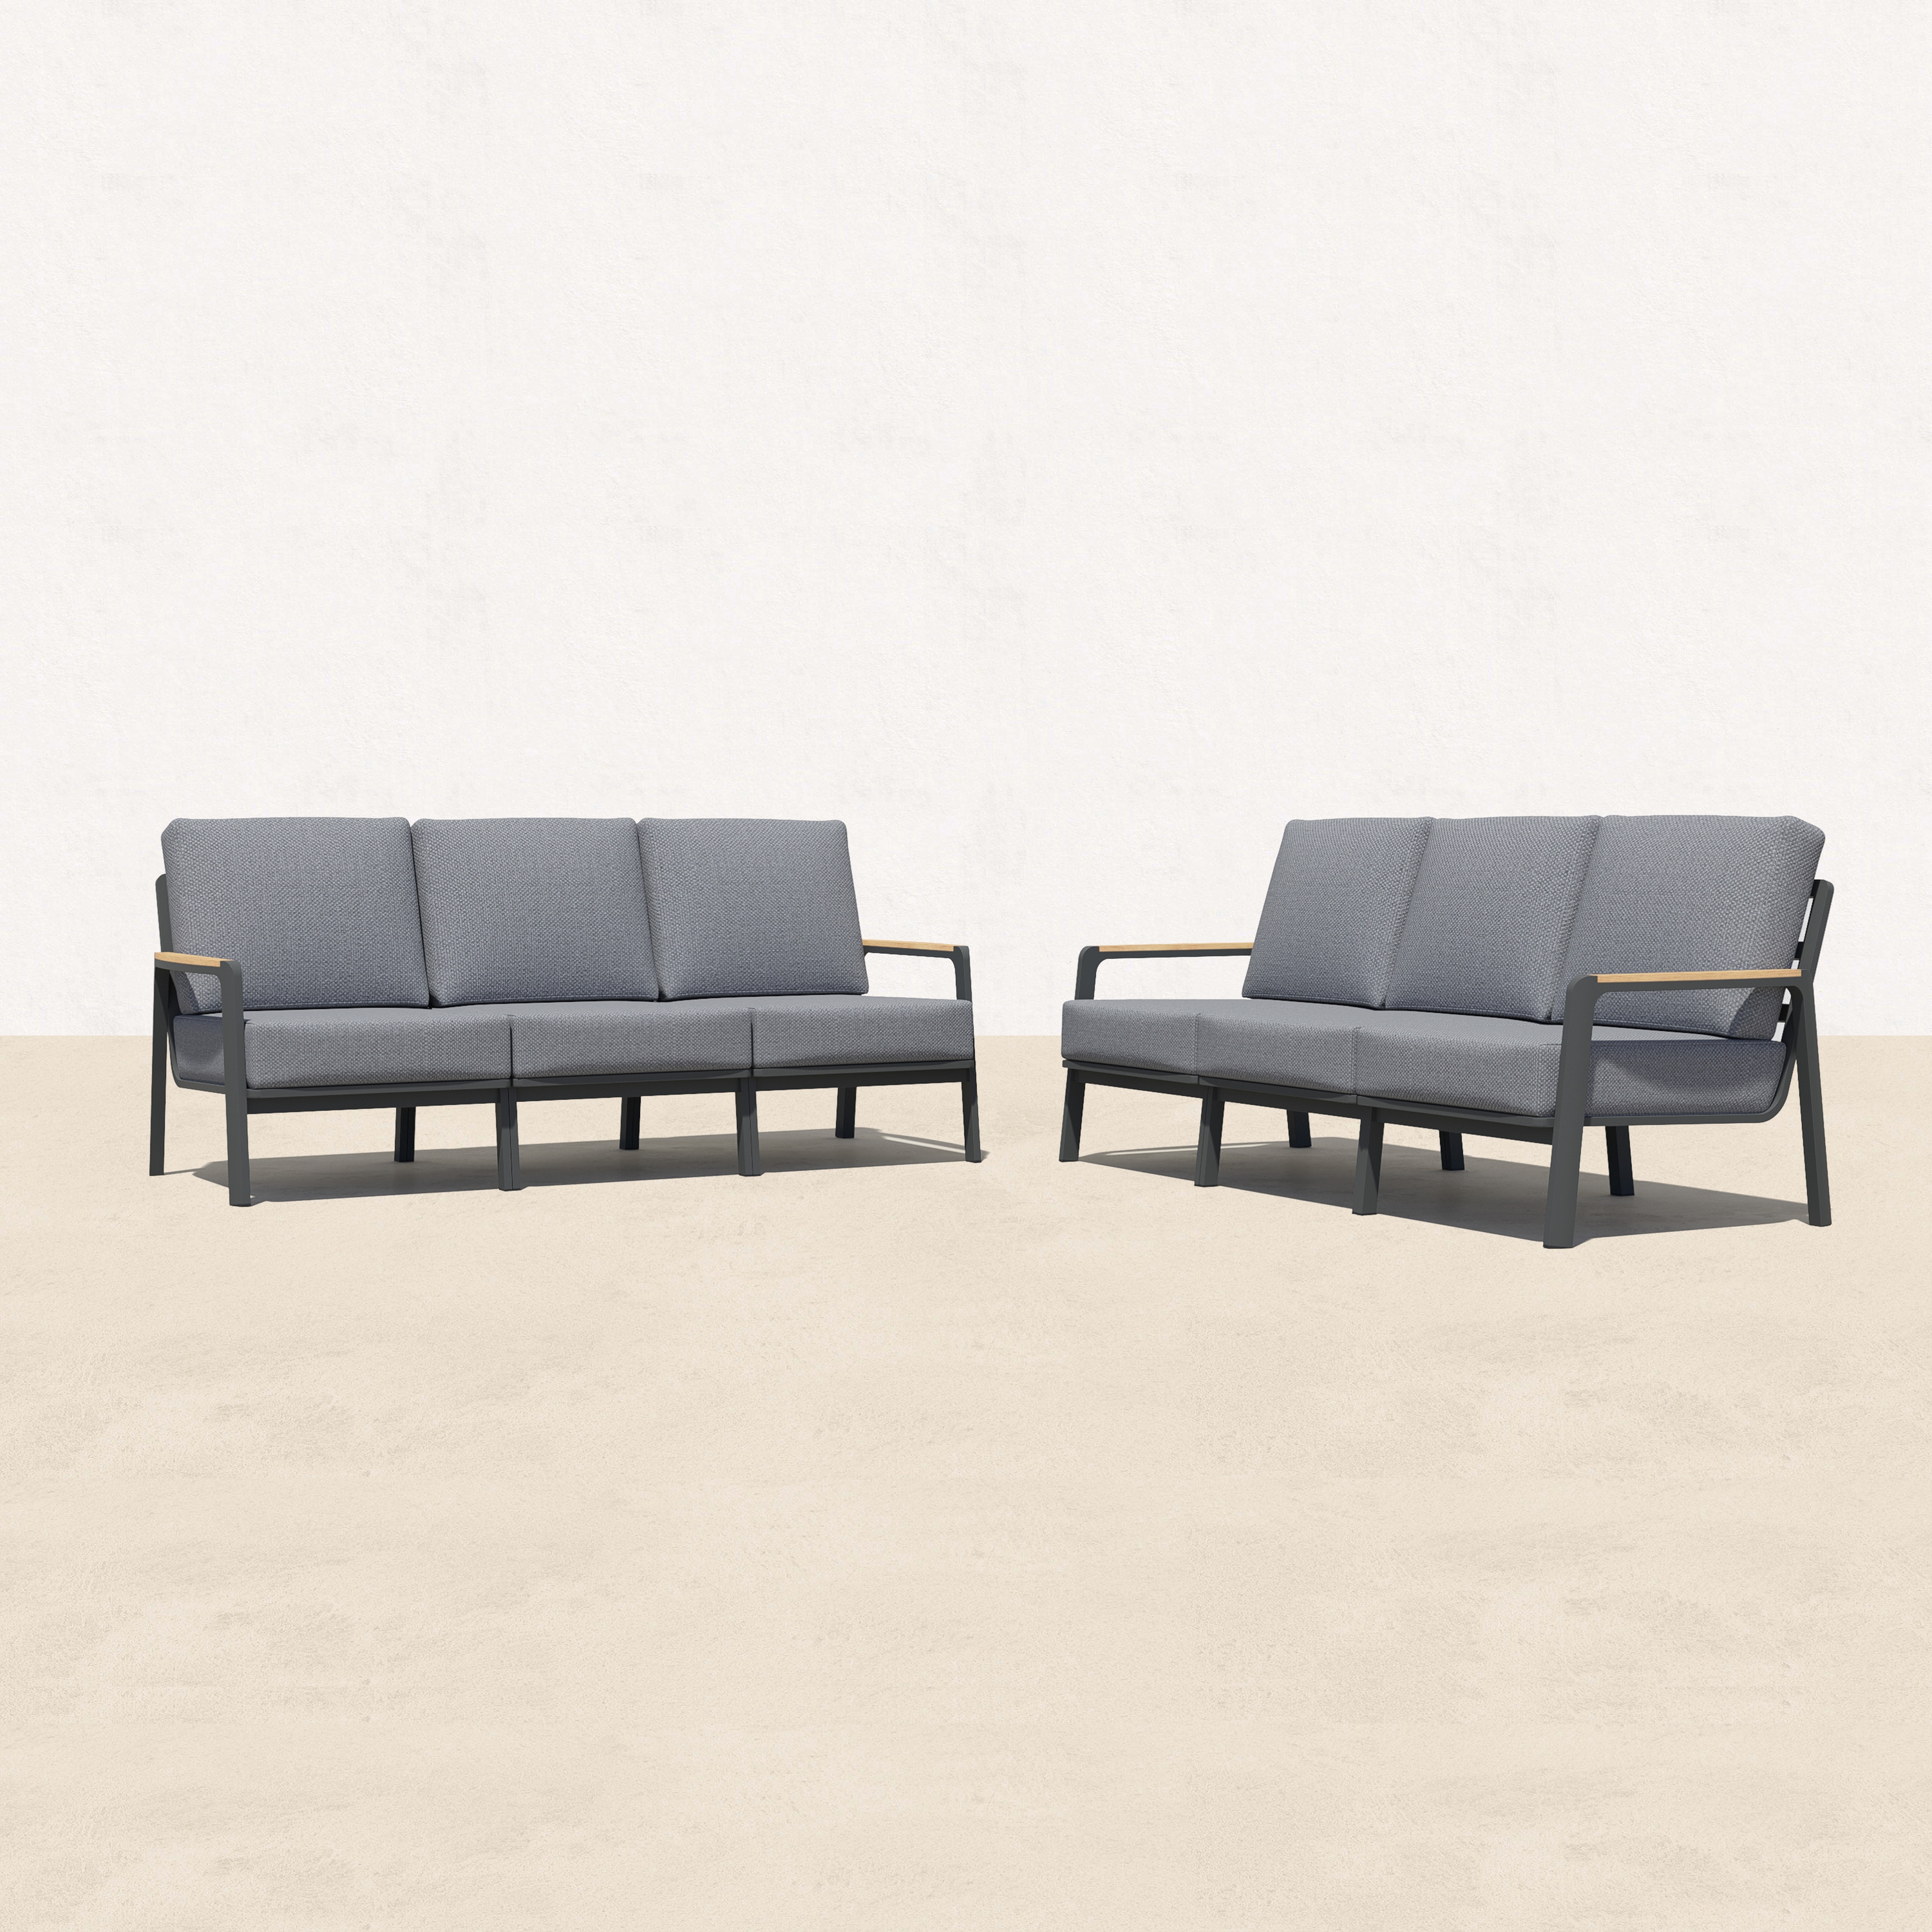 Orion Teak Outdoor Sofa Conversation Set- 6 Seat